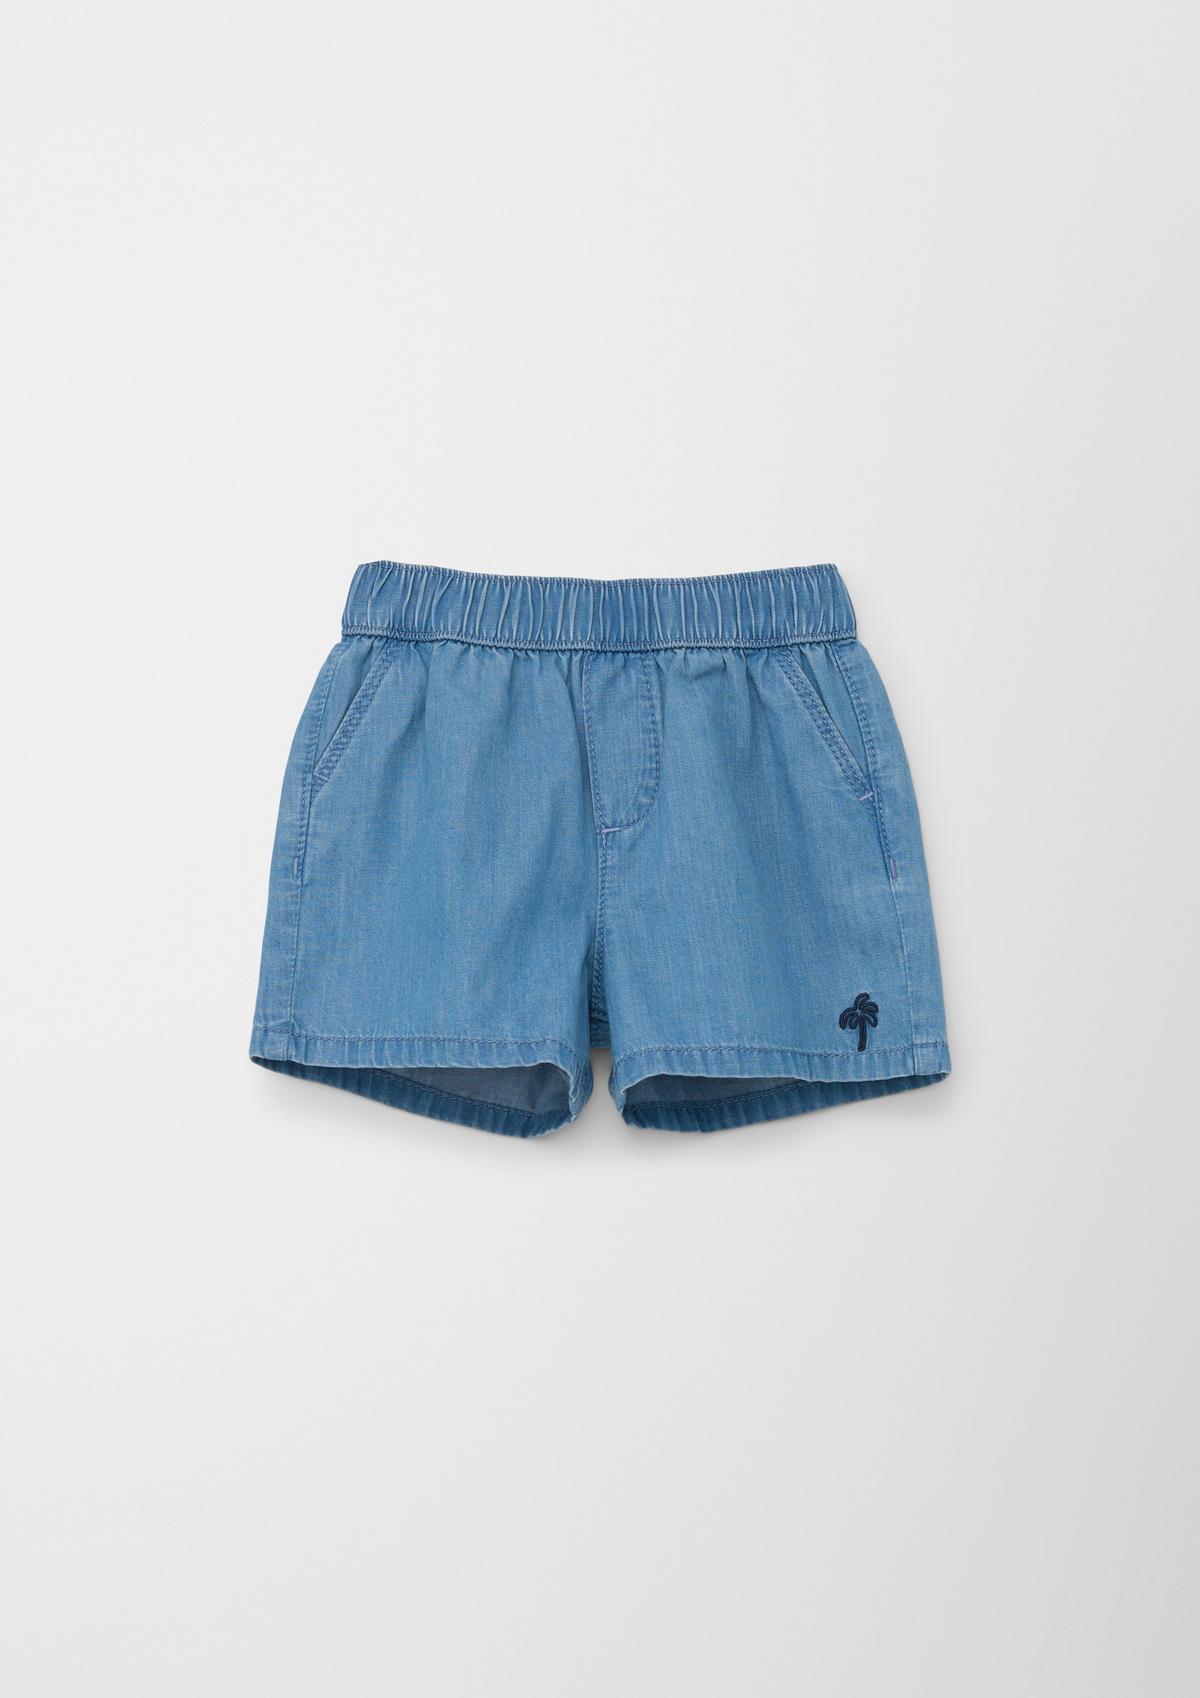 s.Oliver Denim shorts with a vintage effect